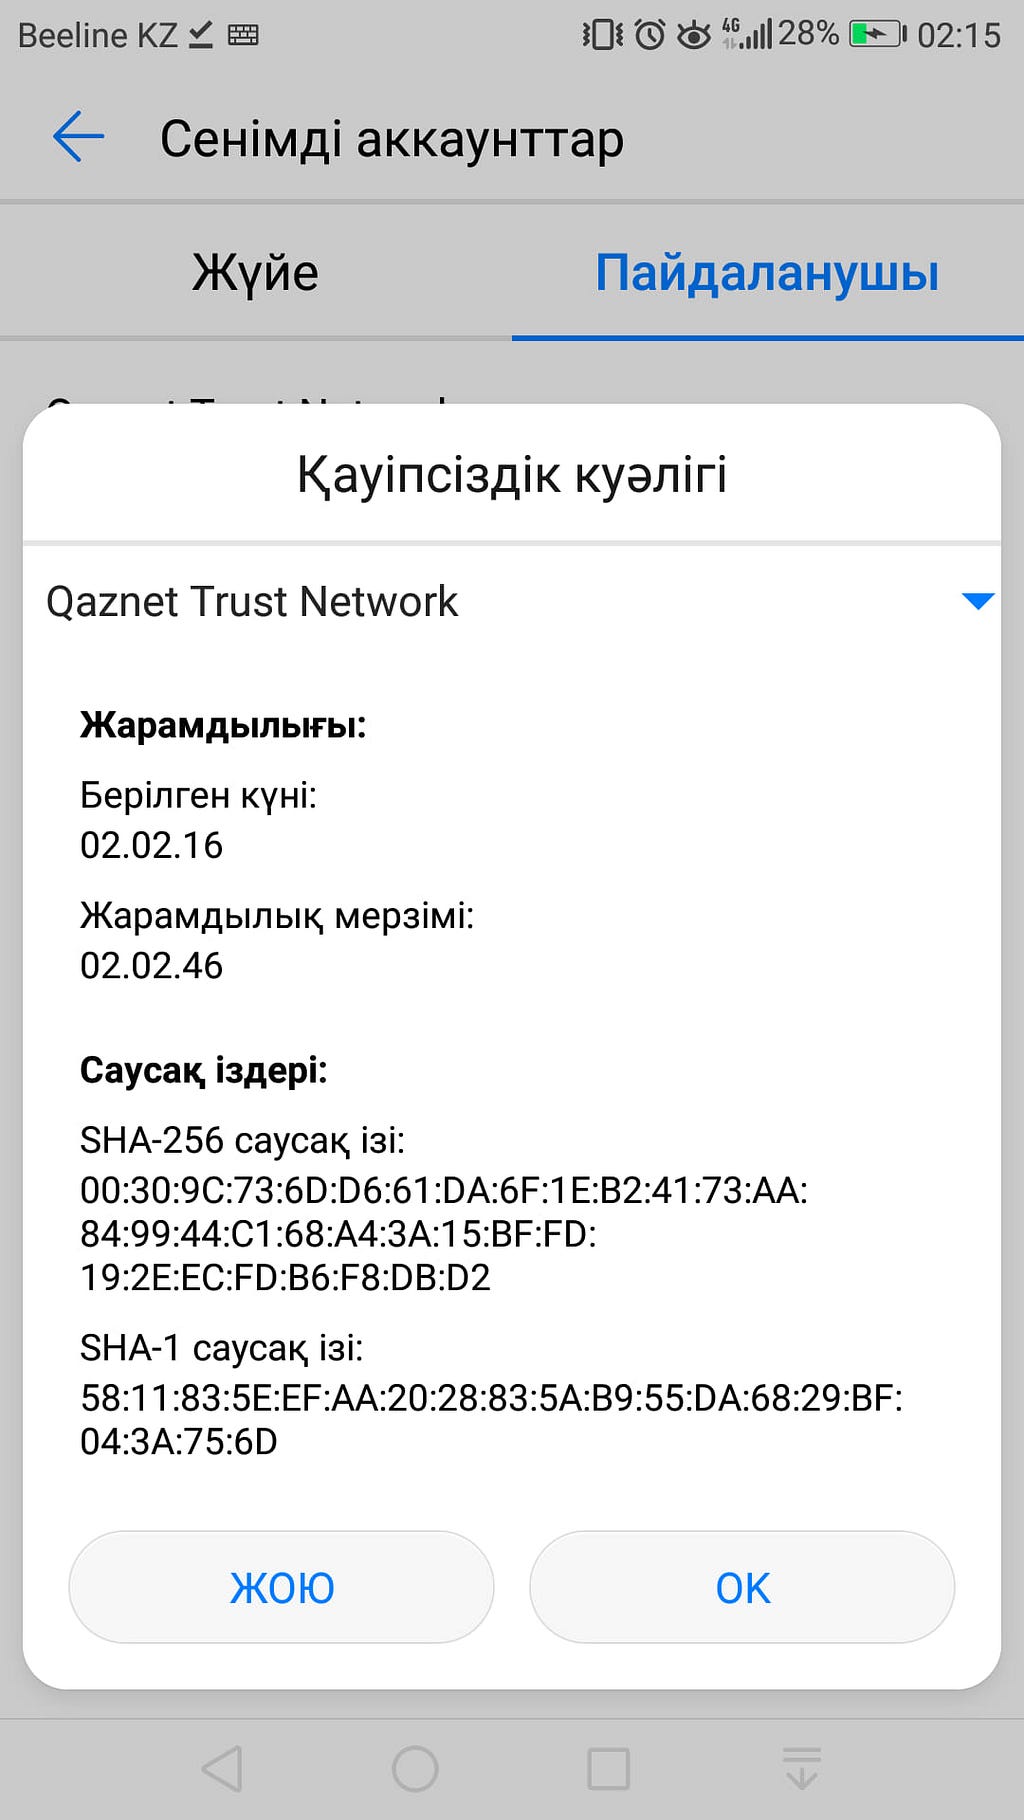 qaznet trust network kazakhstan mitm